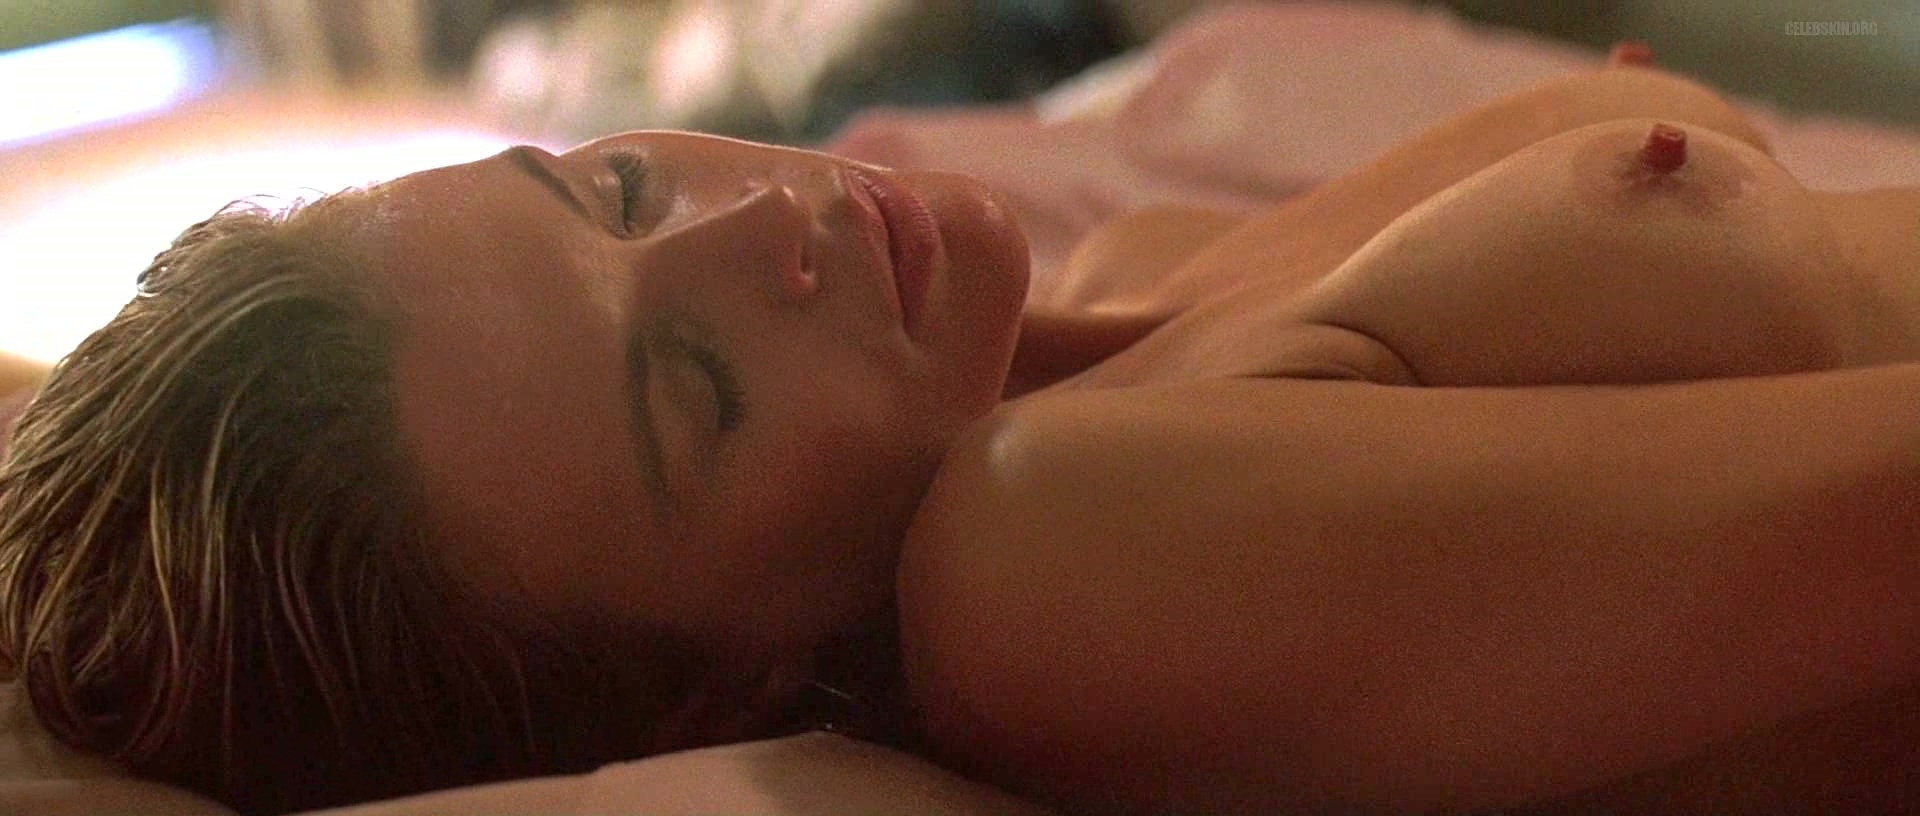 Ким Бейсингер nude pics, Страница -2 < ANCENSORED